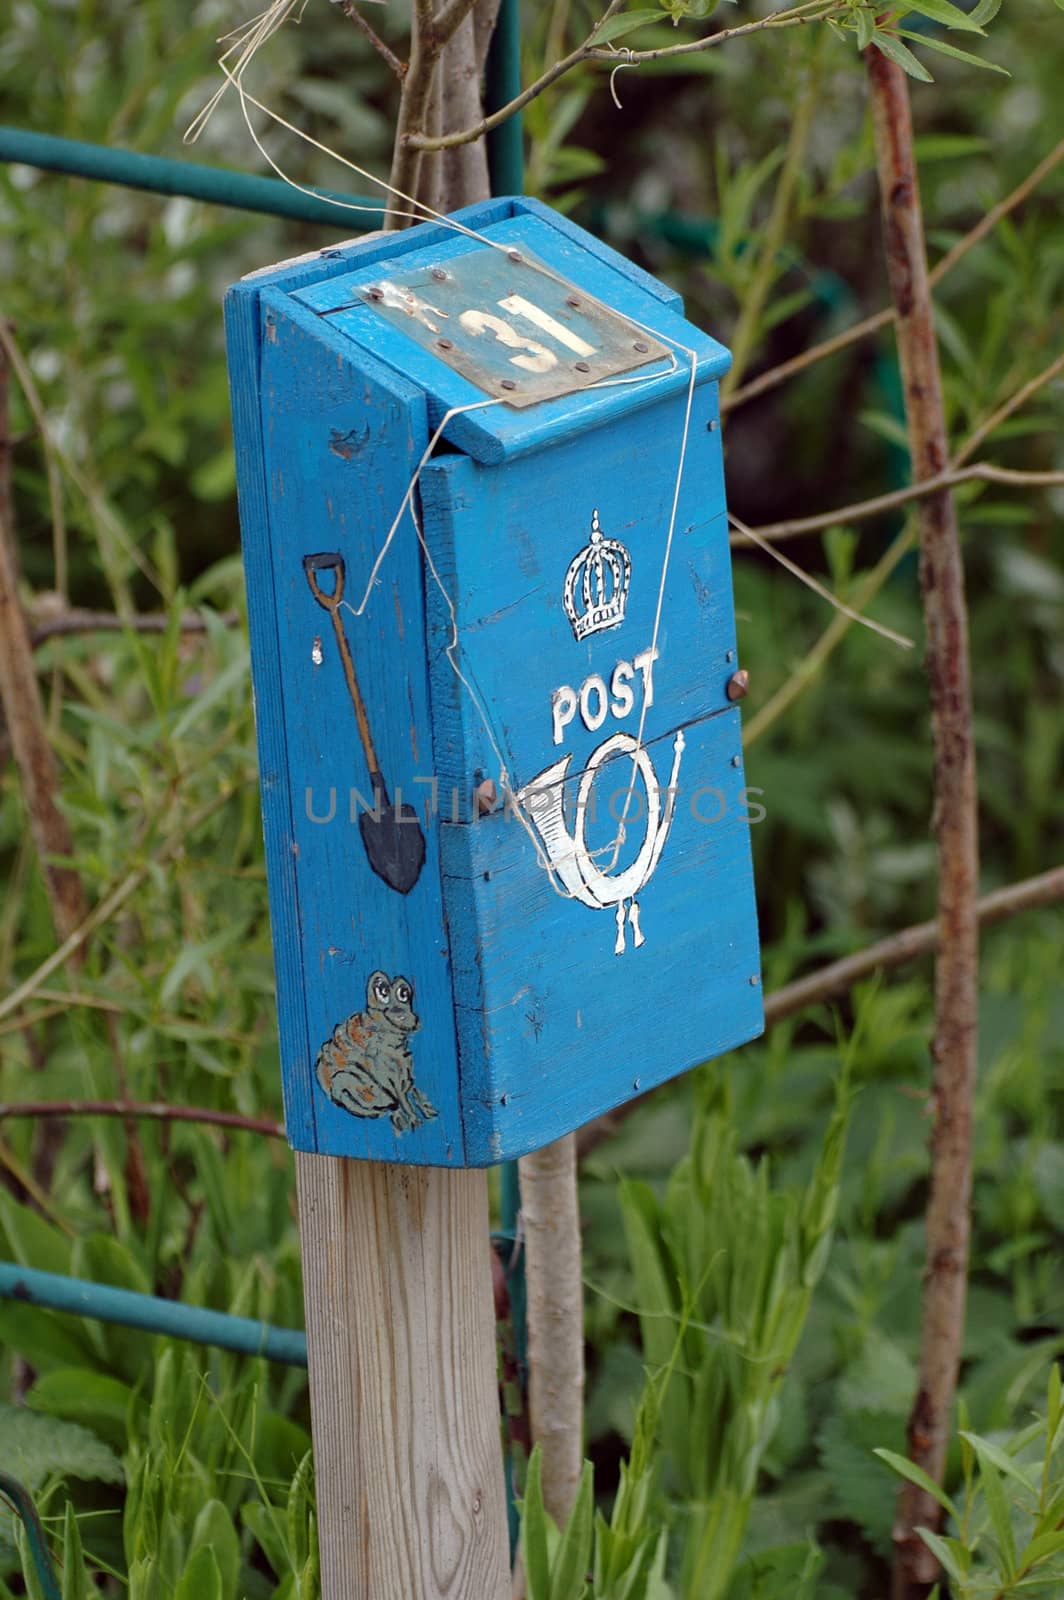 A blue mailbox